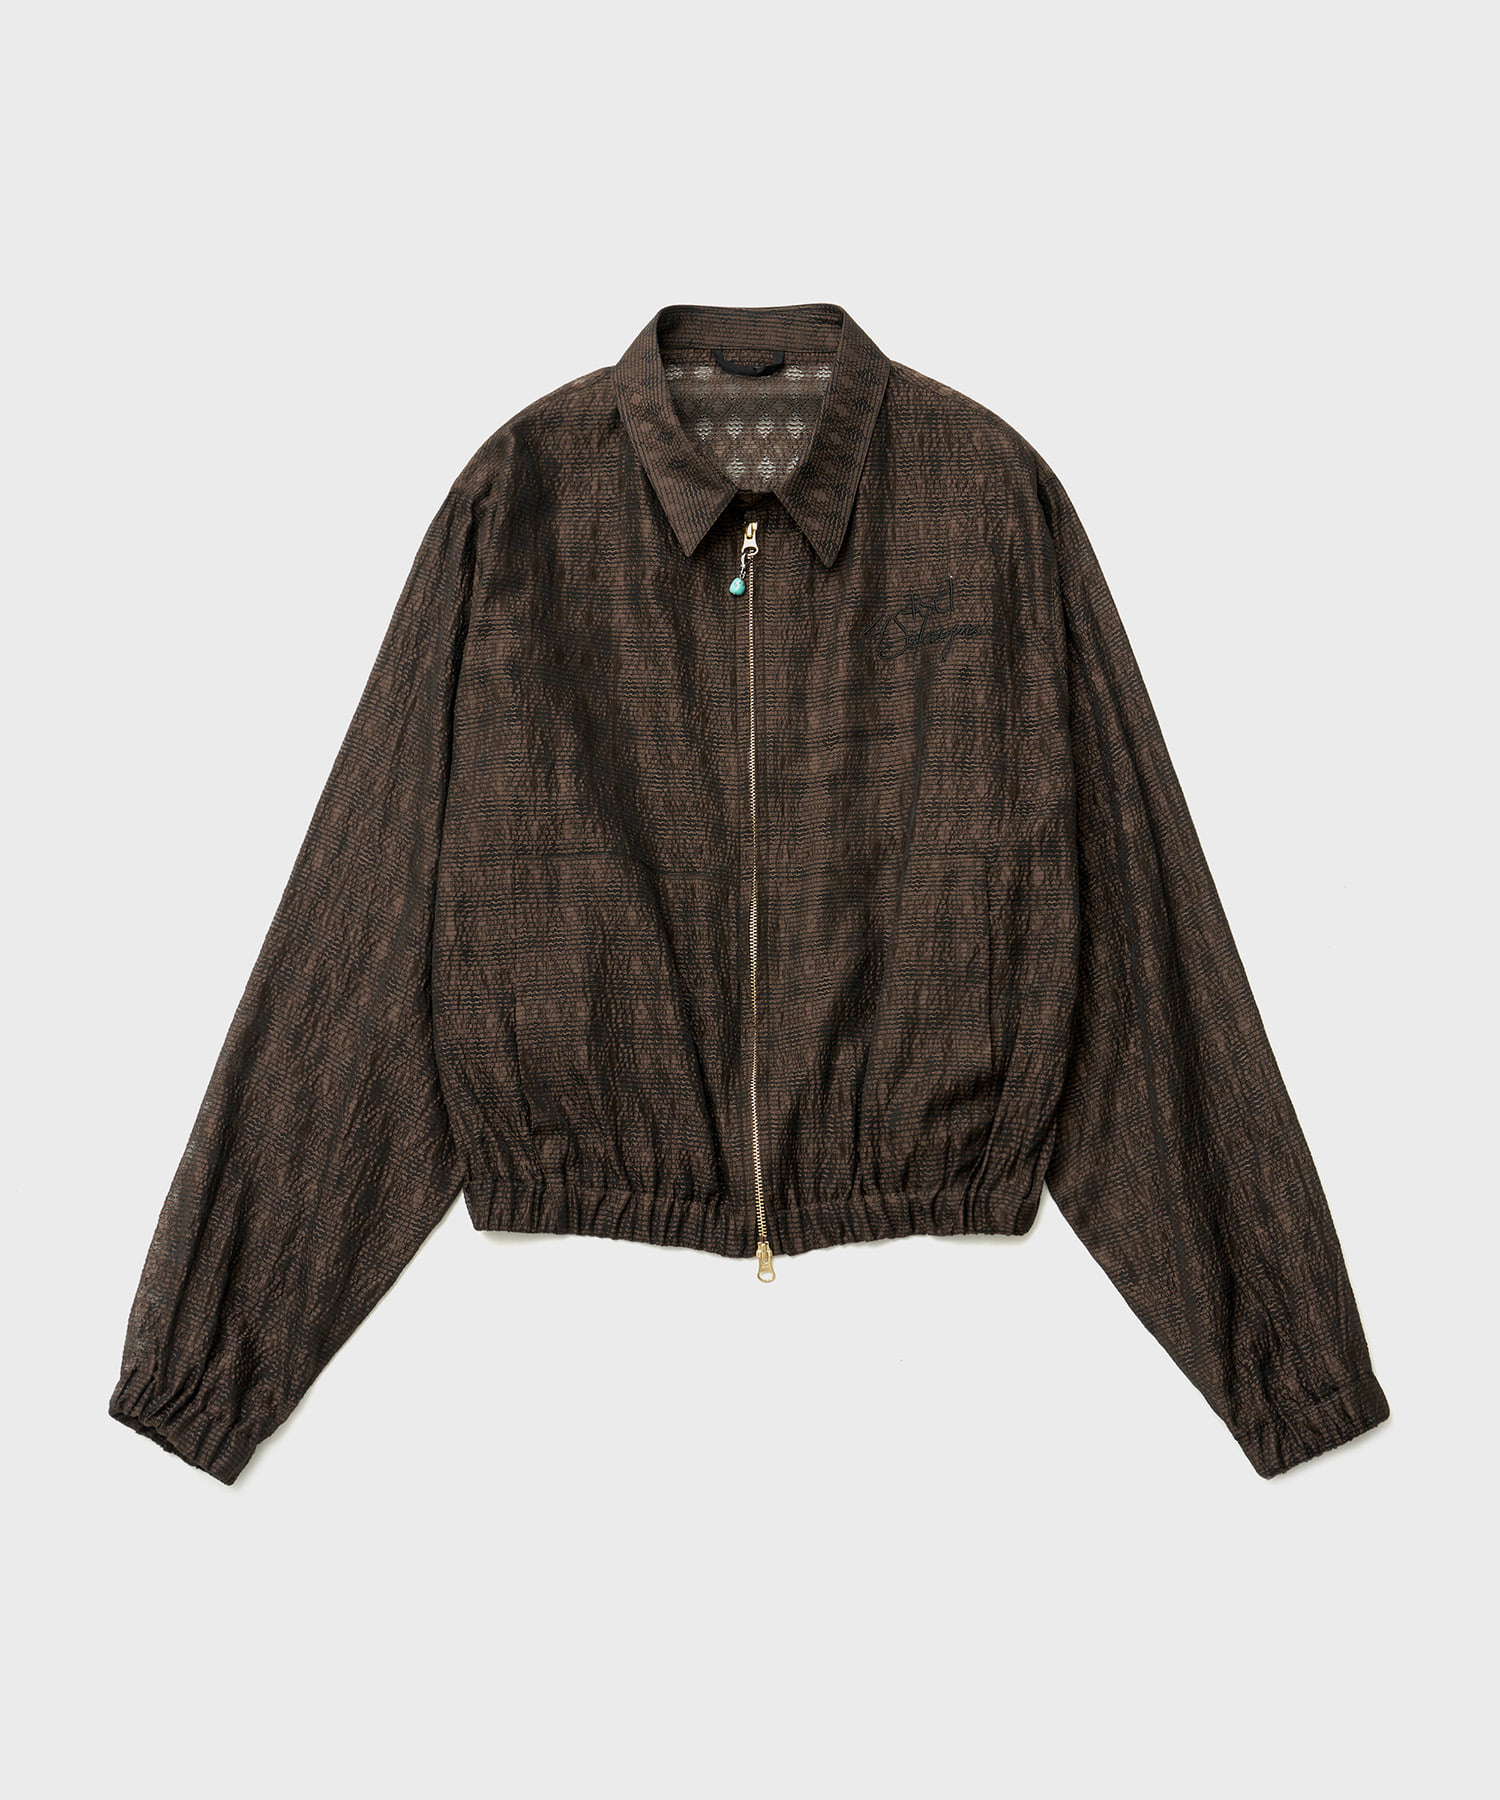 Caddy Shirt/Jacket (Camel)